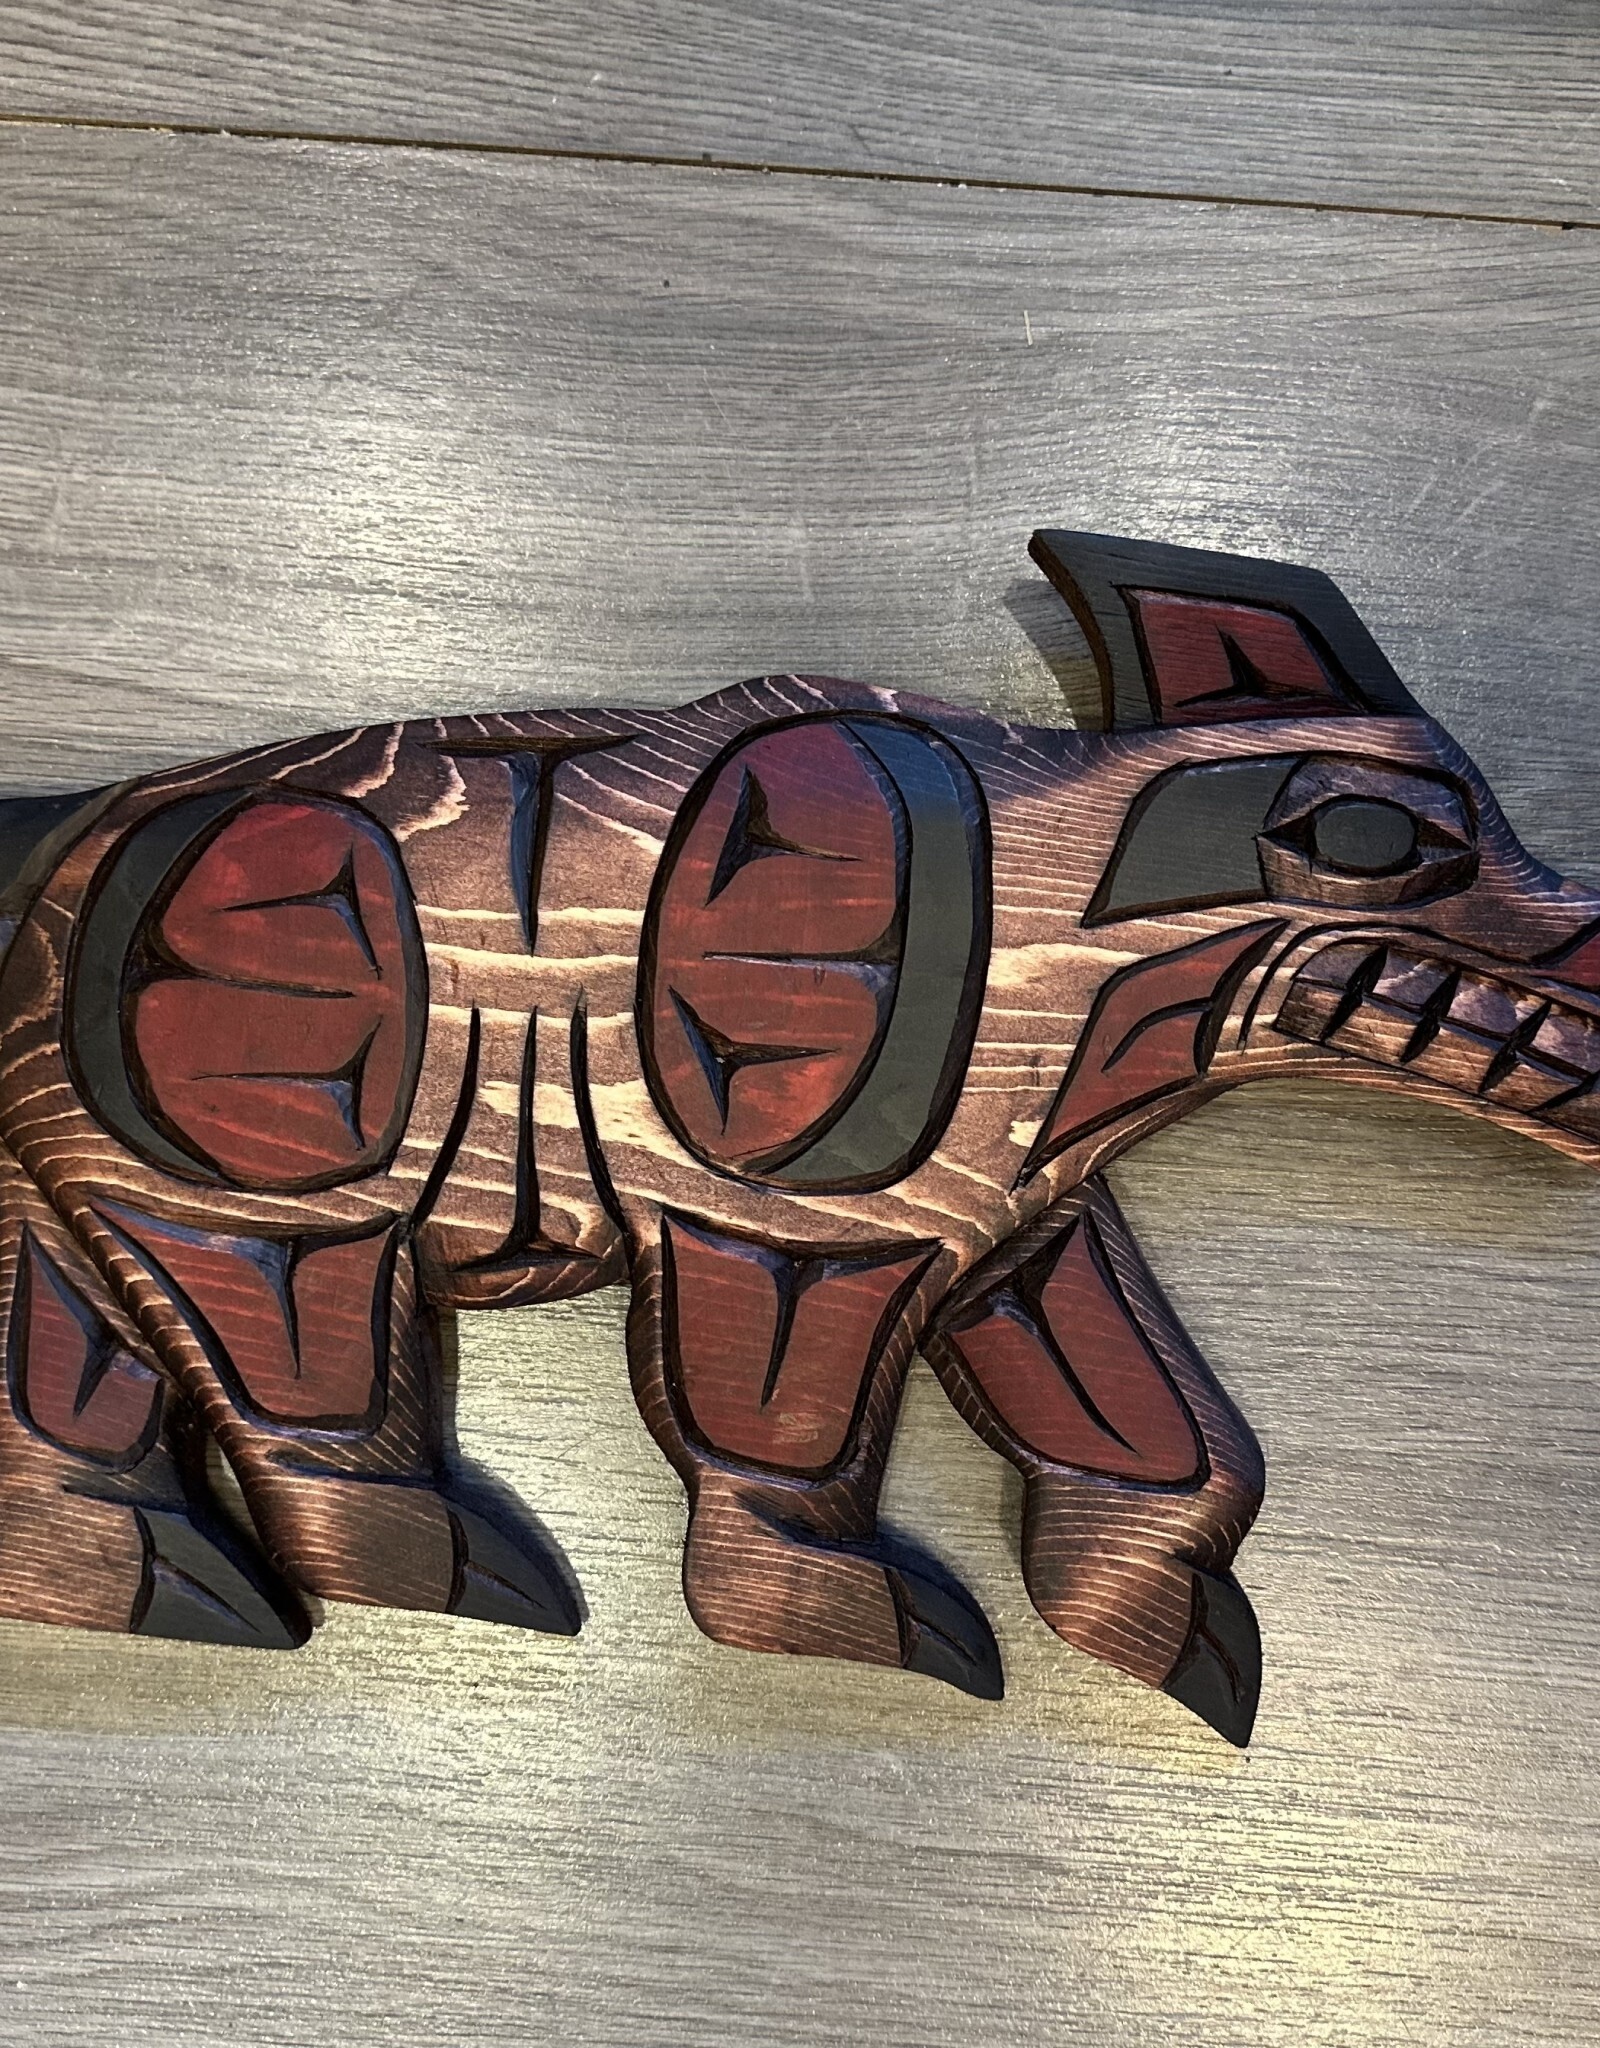 Aboriginal - Walking Bear Carving - Carver: Connie Edwards